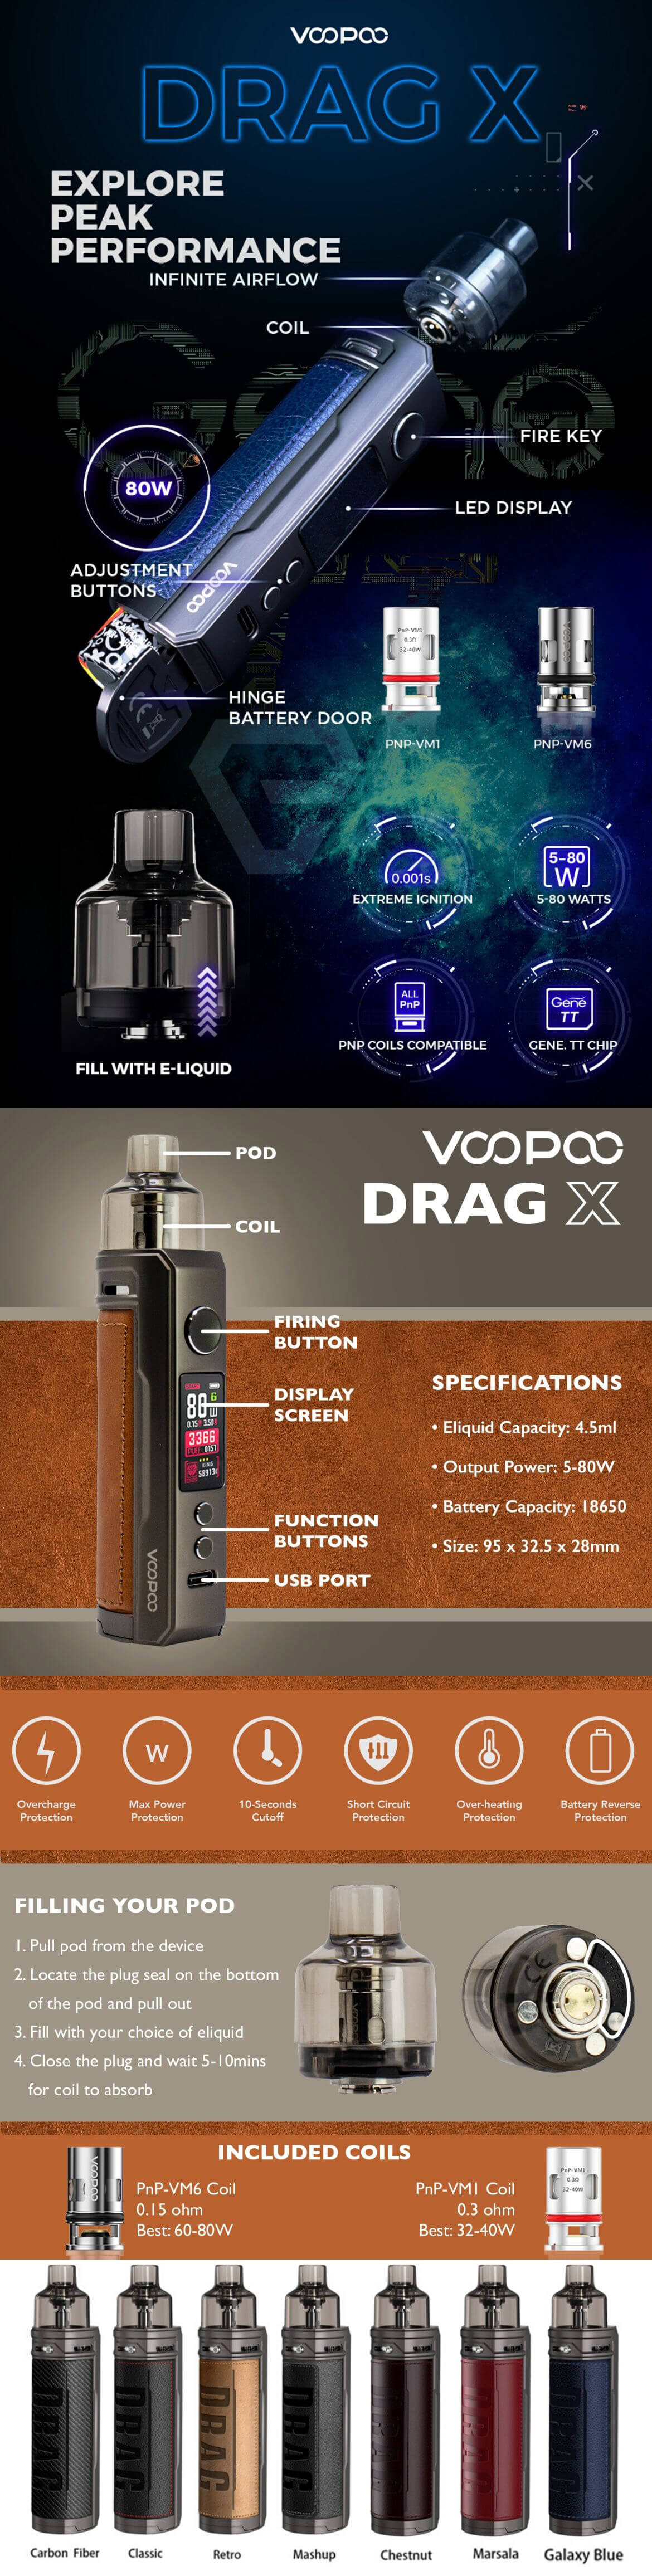 voopoo-drag-x-pod-mod-5